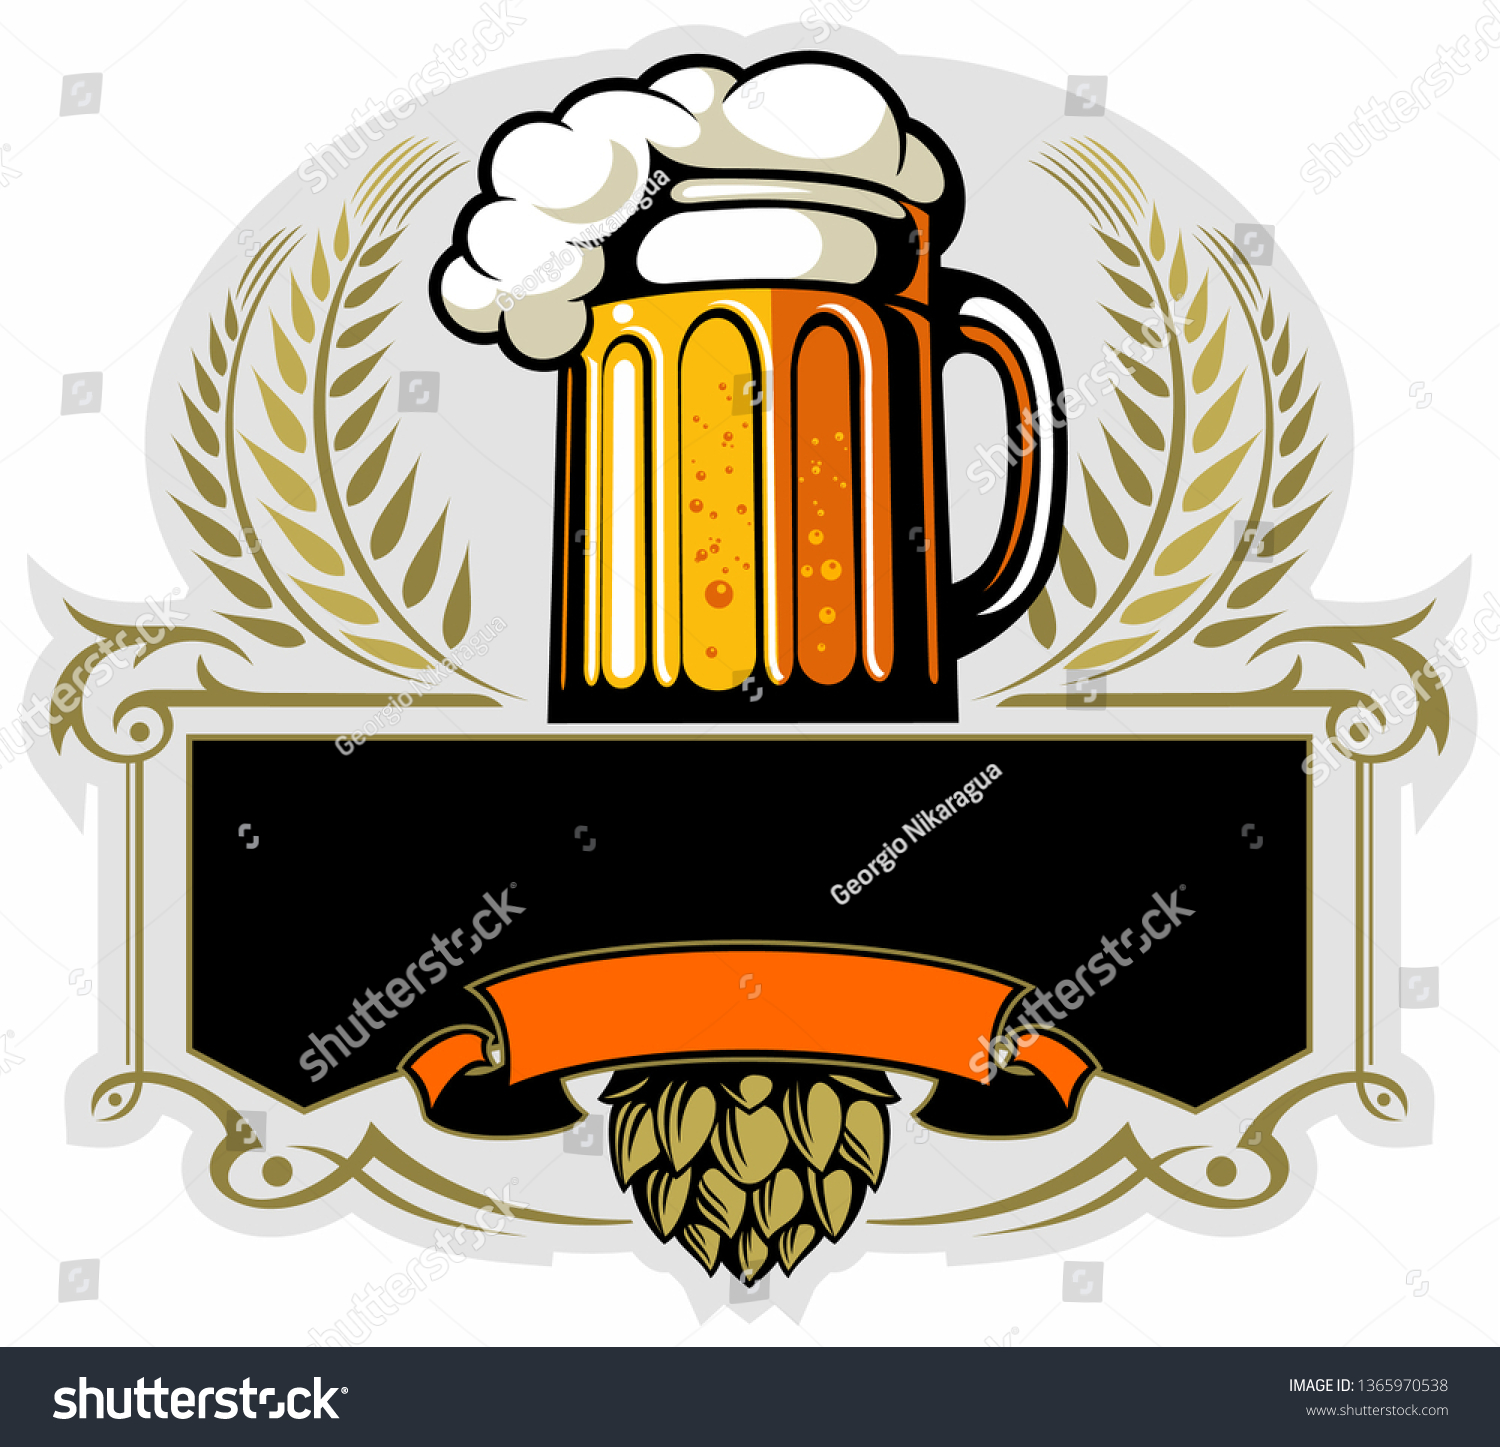 bar logo pub logo beverage logo beer foam logo Beer bar logo hops logo mug logo craft beer logo glass logo drink logo barley logo